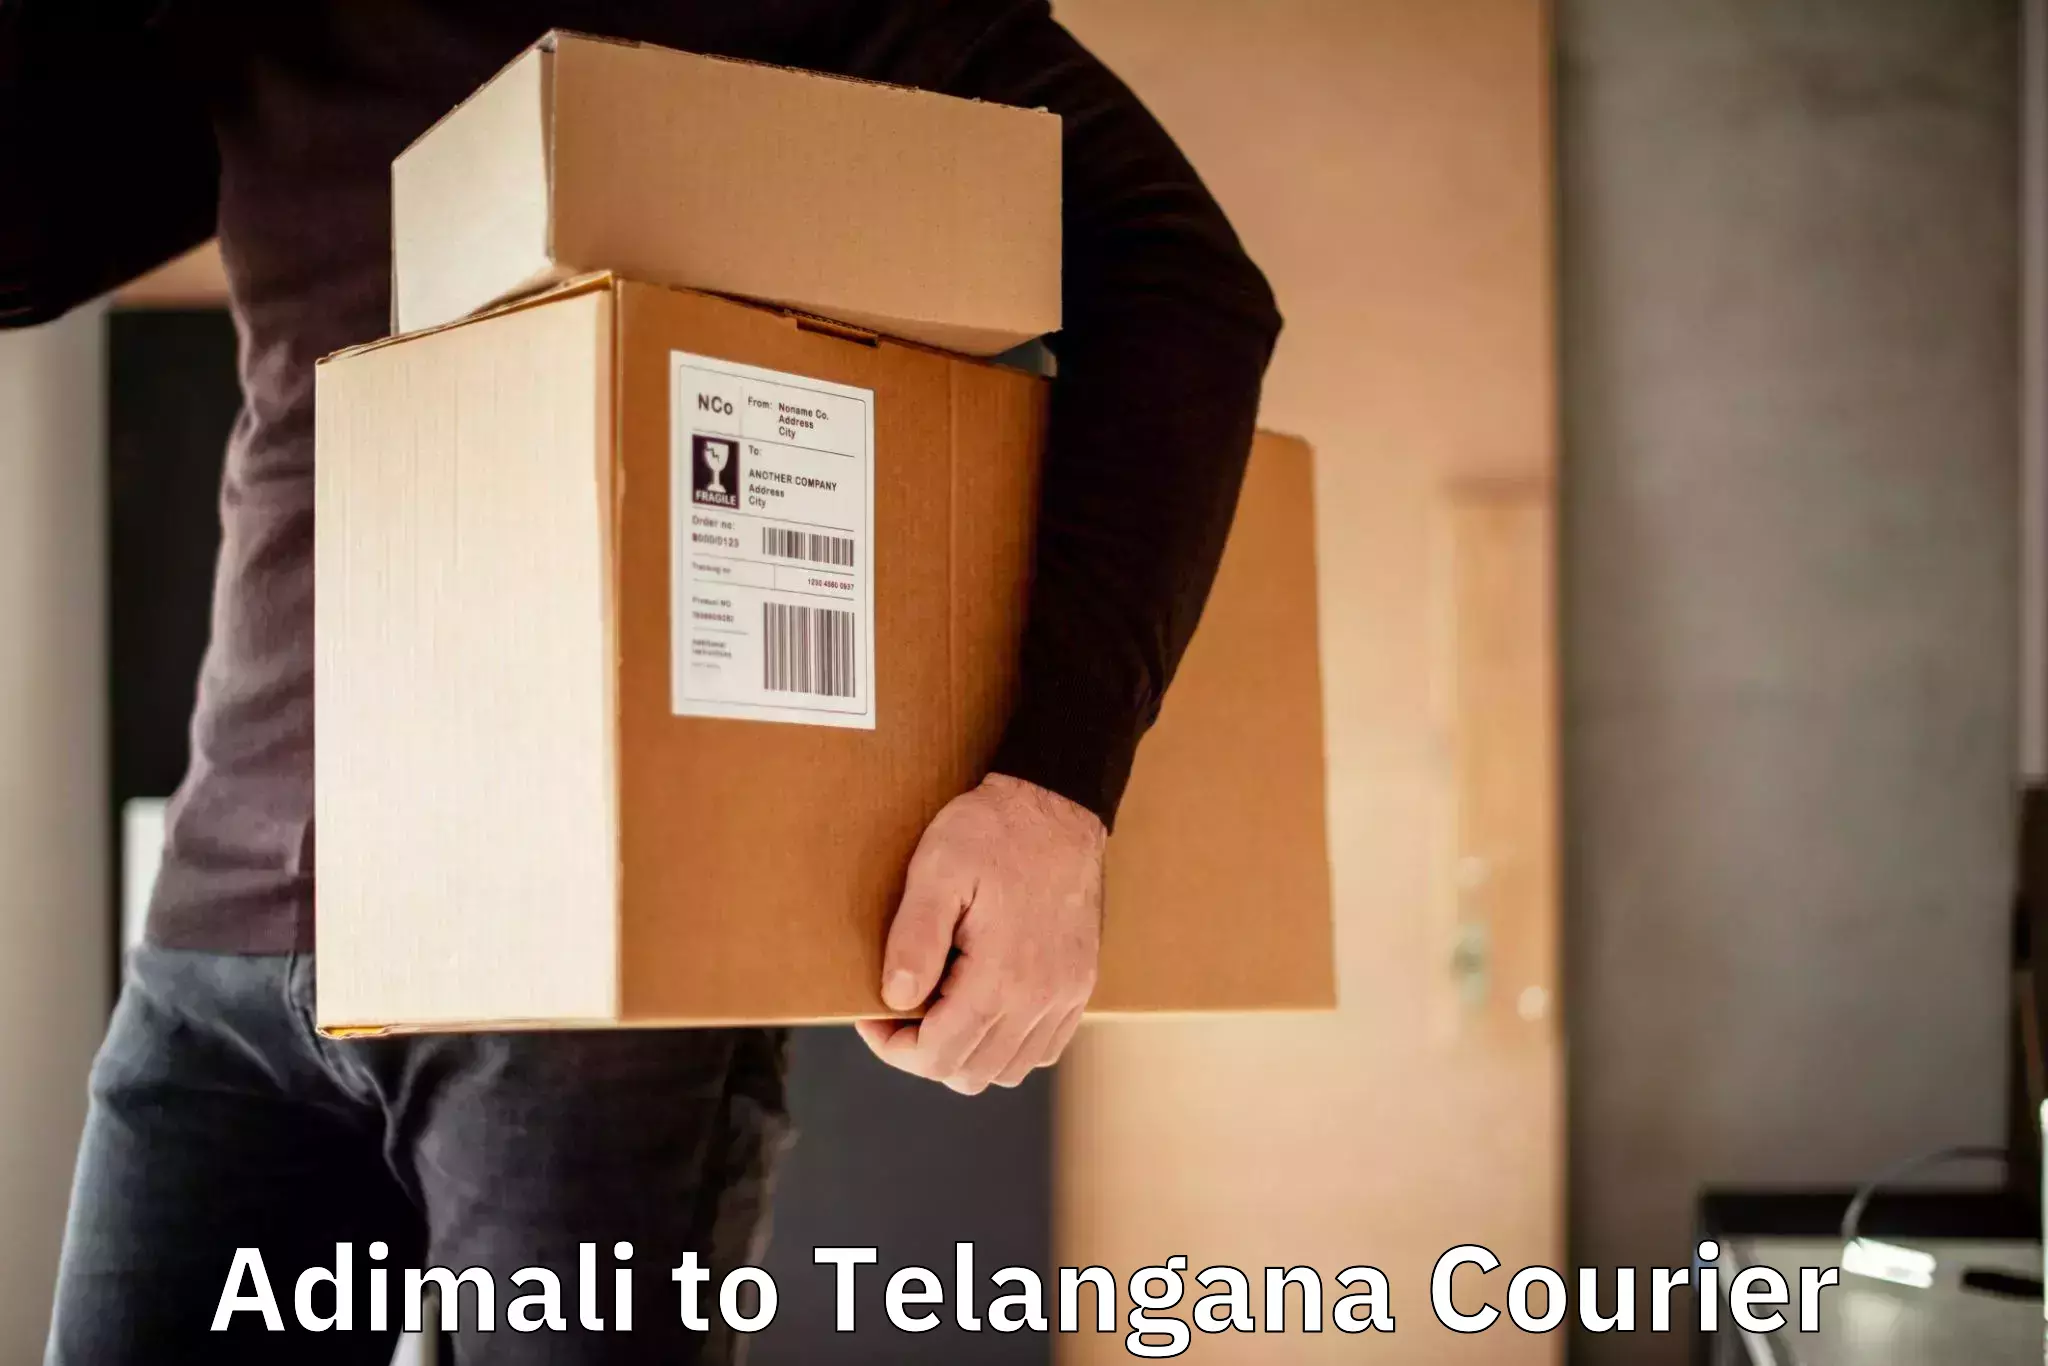 Courier service partnerships in Adimali to Telangana